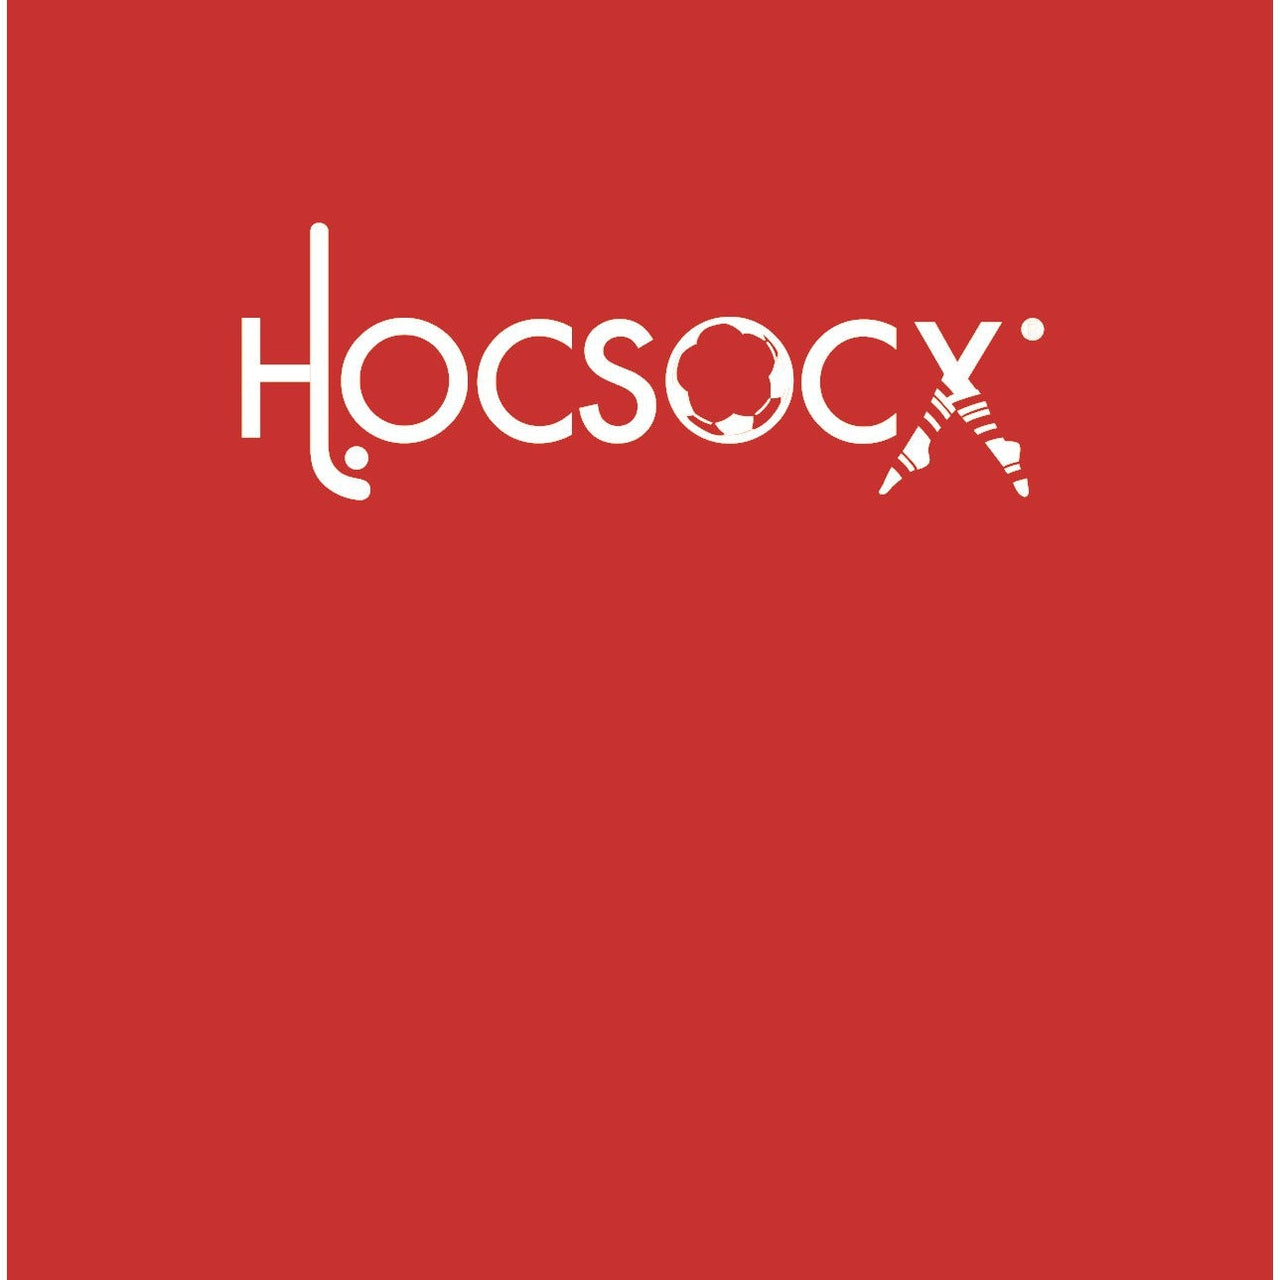 Red Socks - Hocsocx Inc